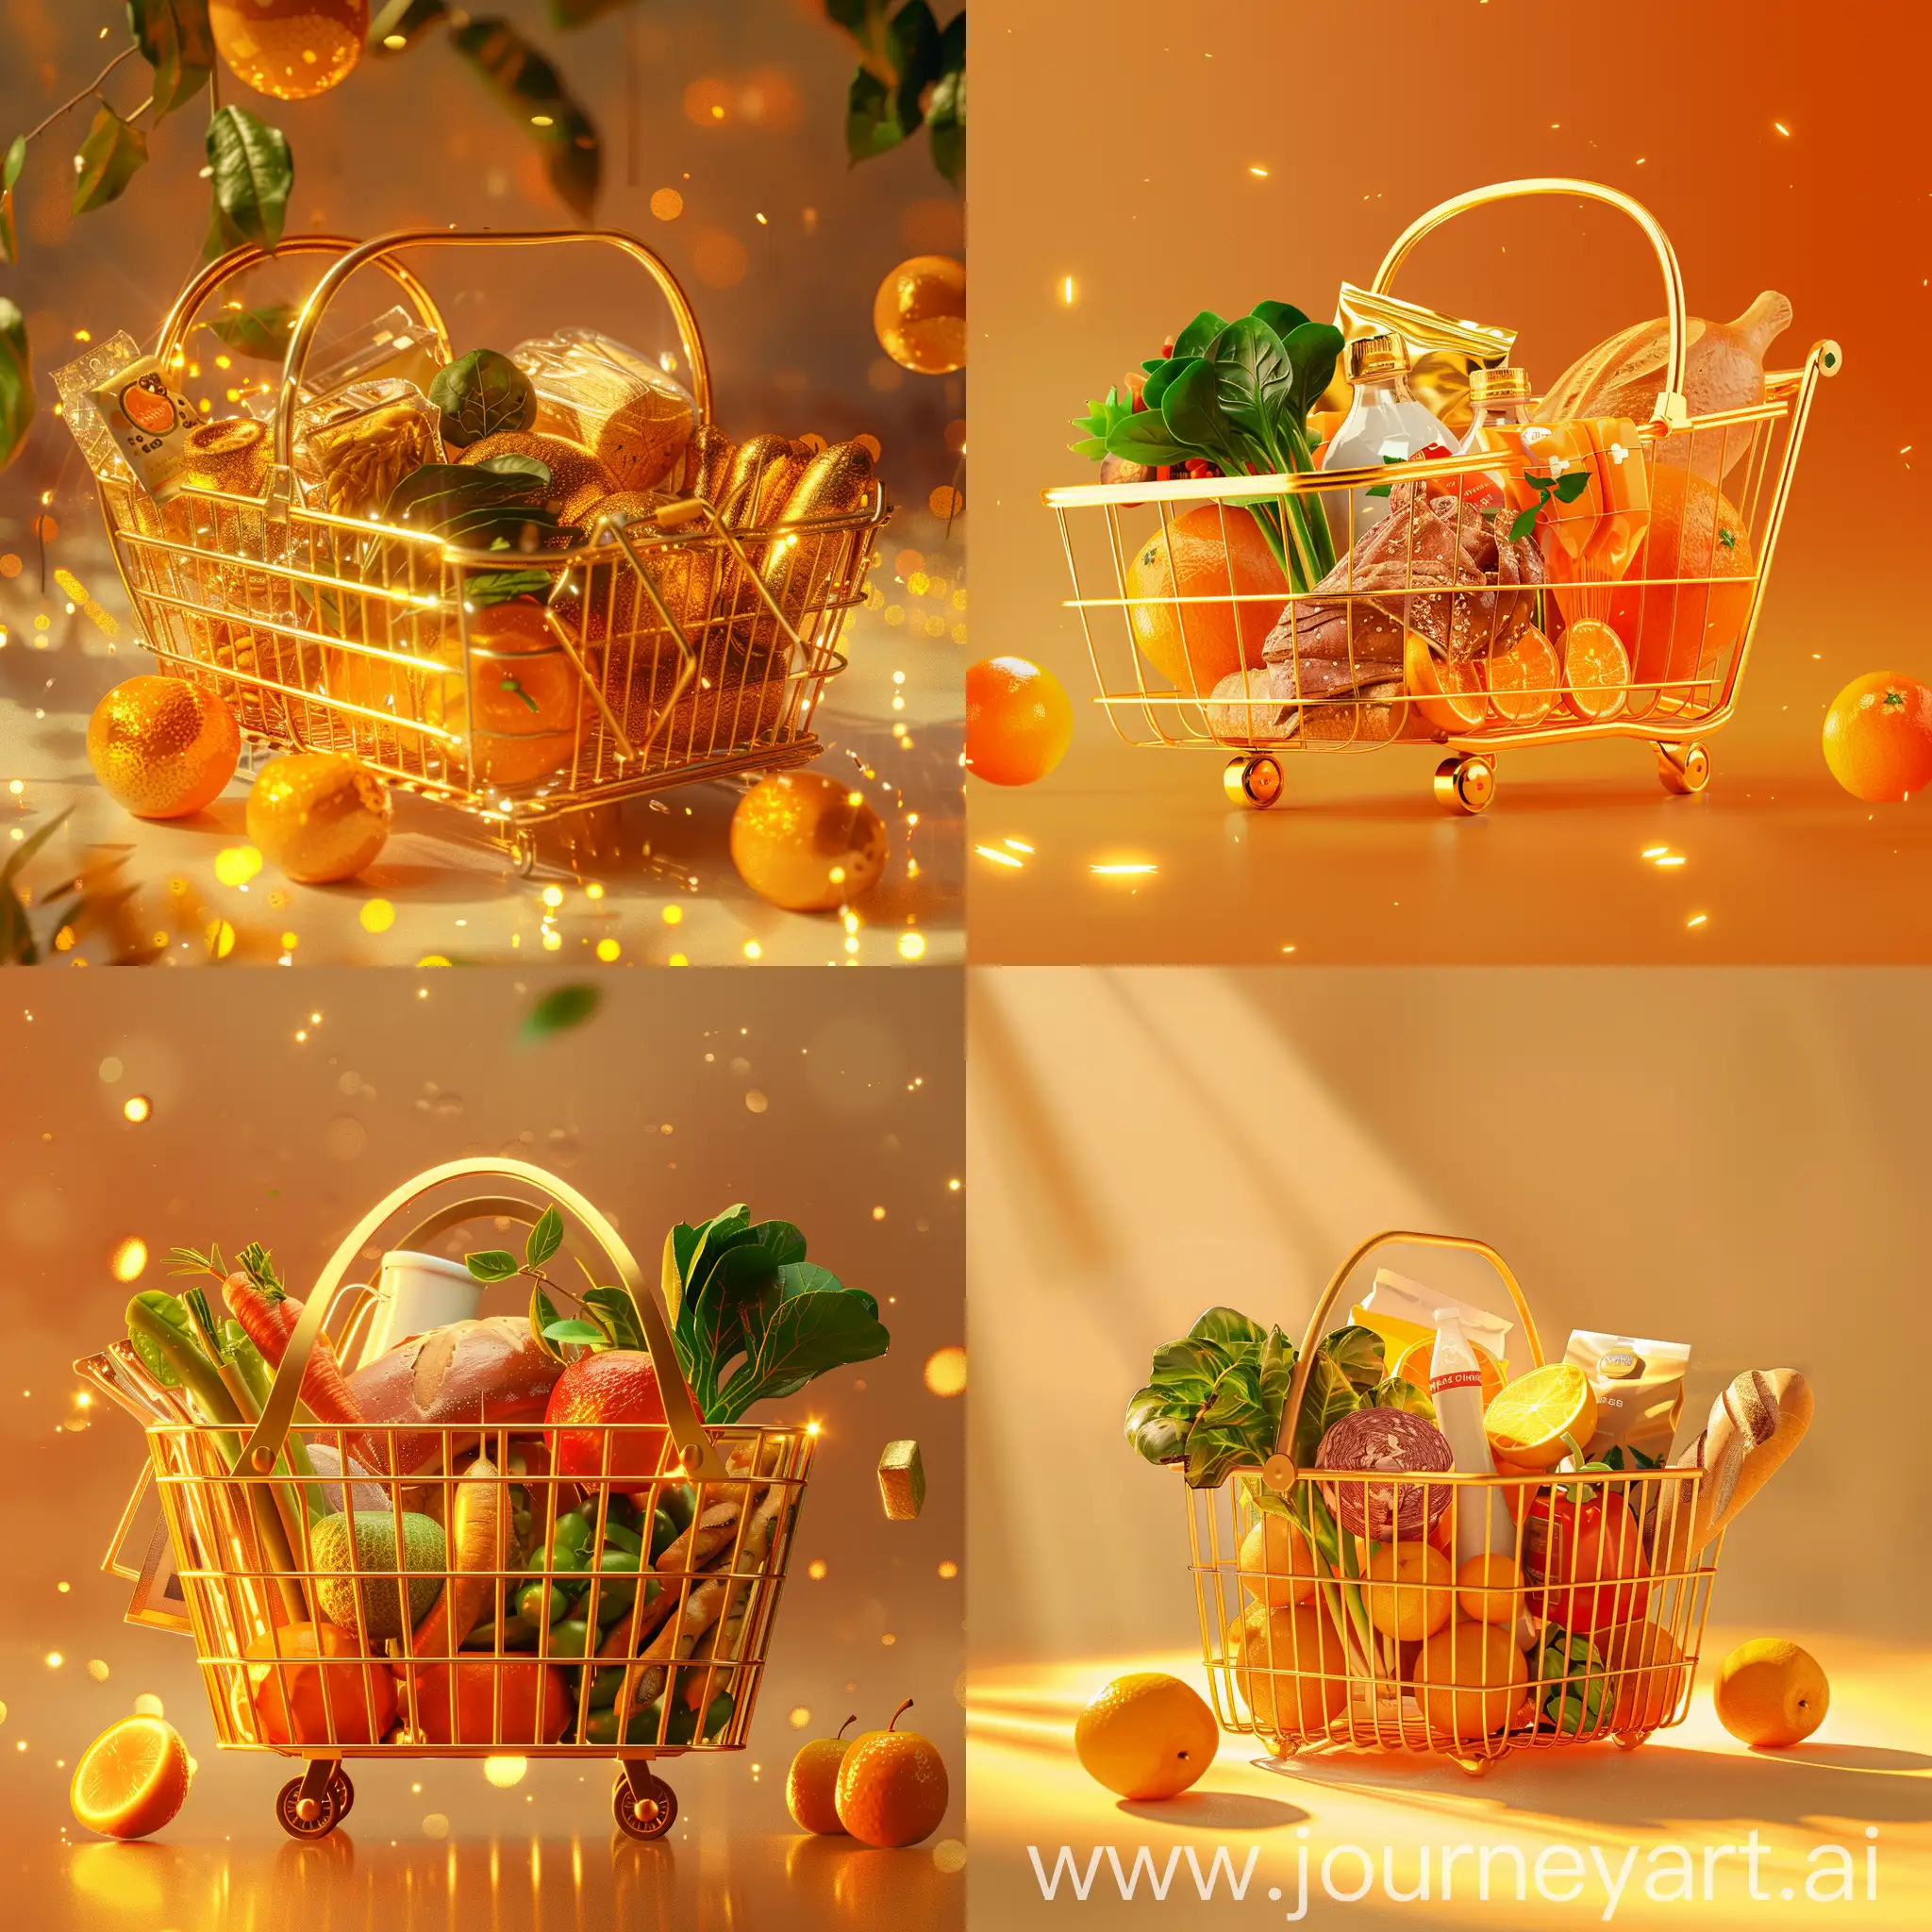 Golden-Shopping-Basket-with-Groceries-on-Orange-Banner